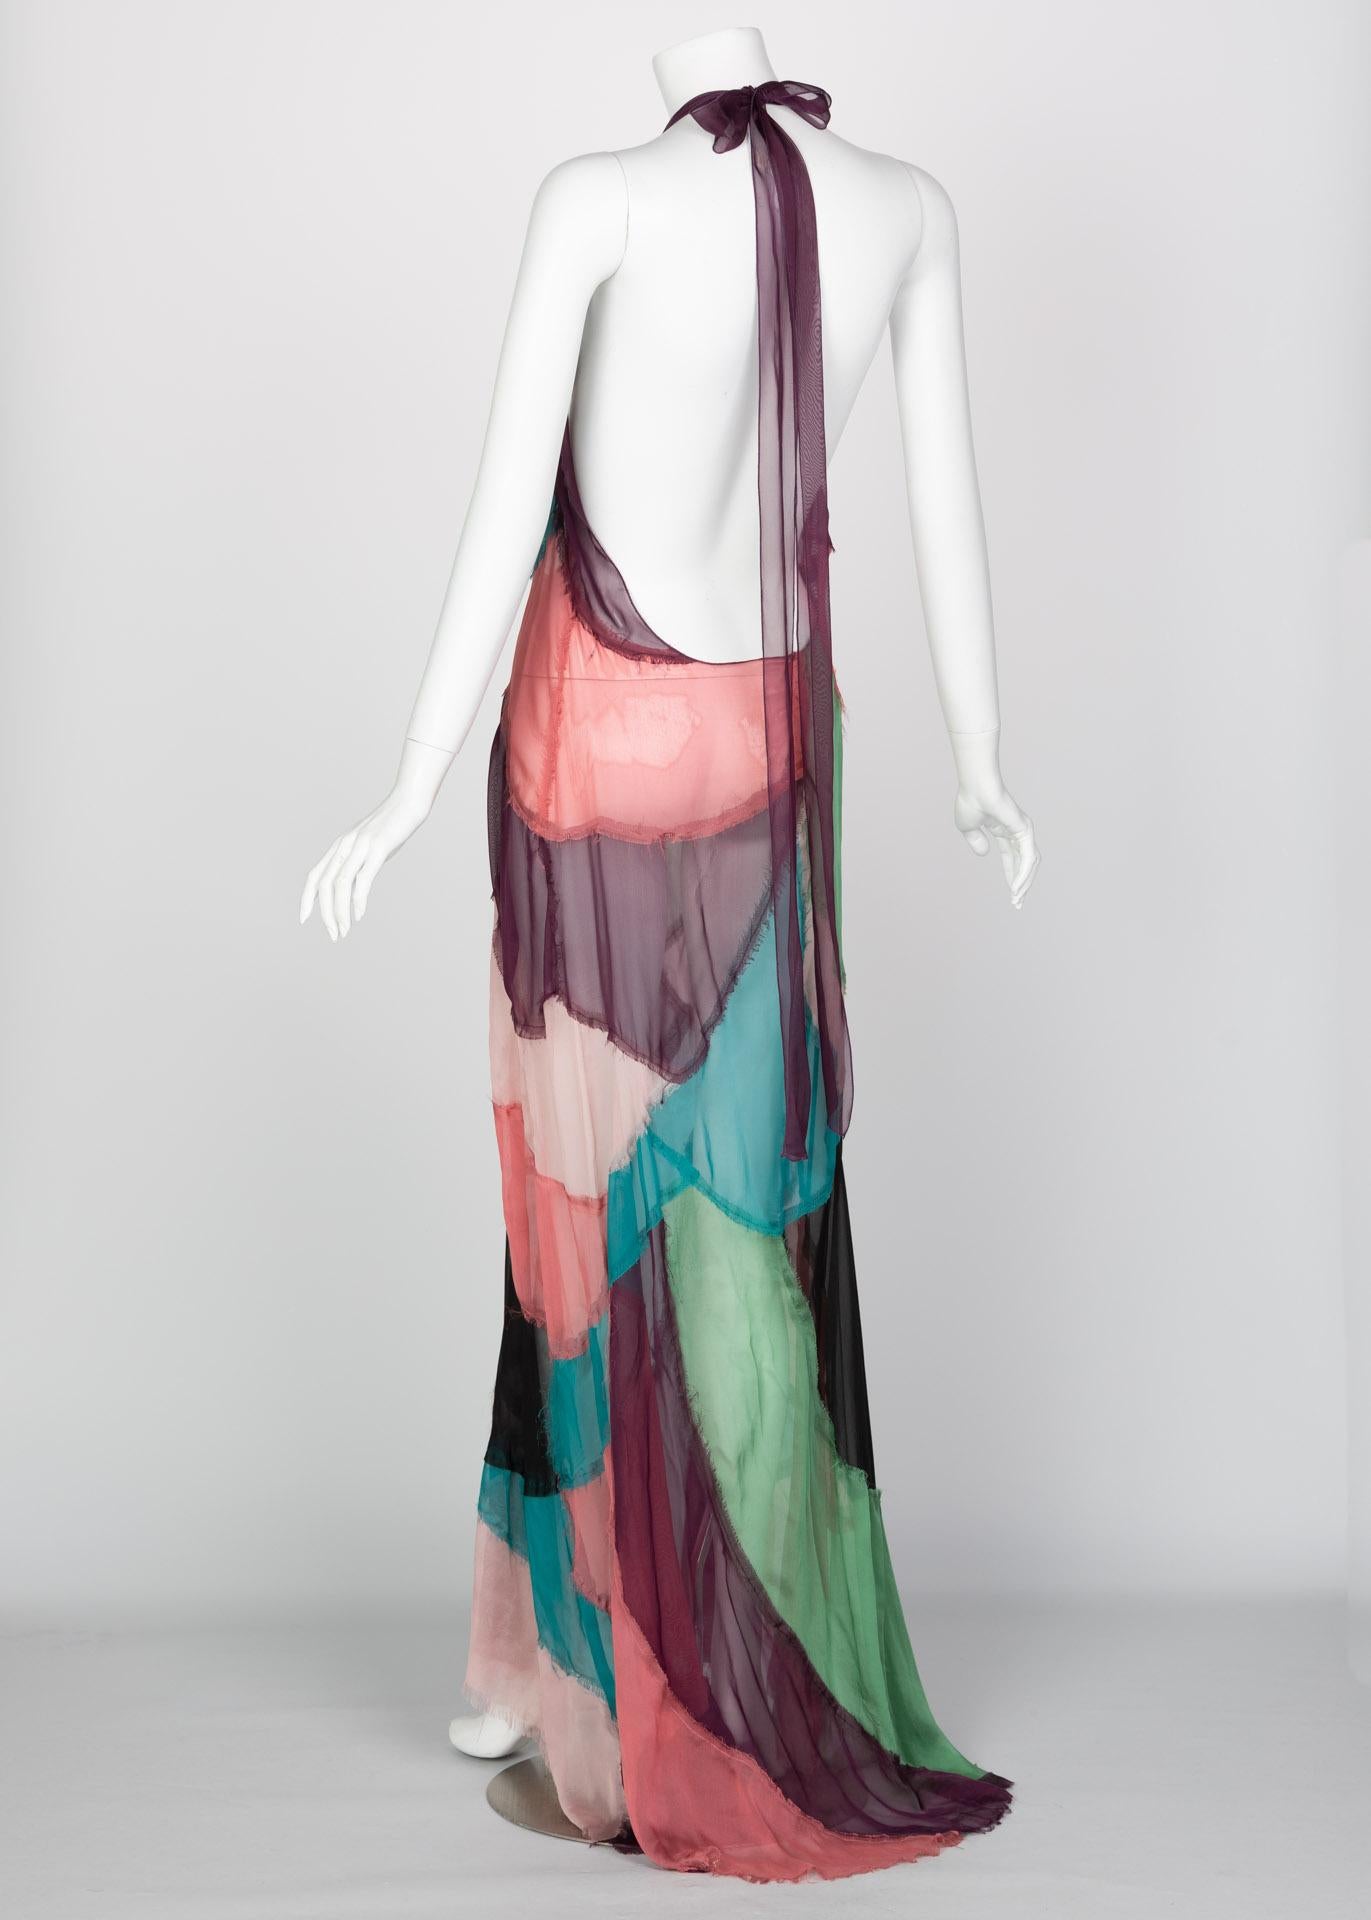 Alberta Ferretti Silk Chiffon Patchwork Open back Halter Gown, 2005 For Sale 1